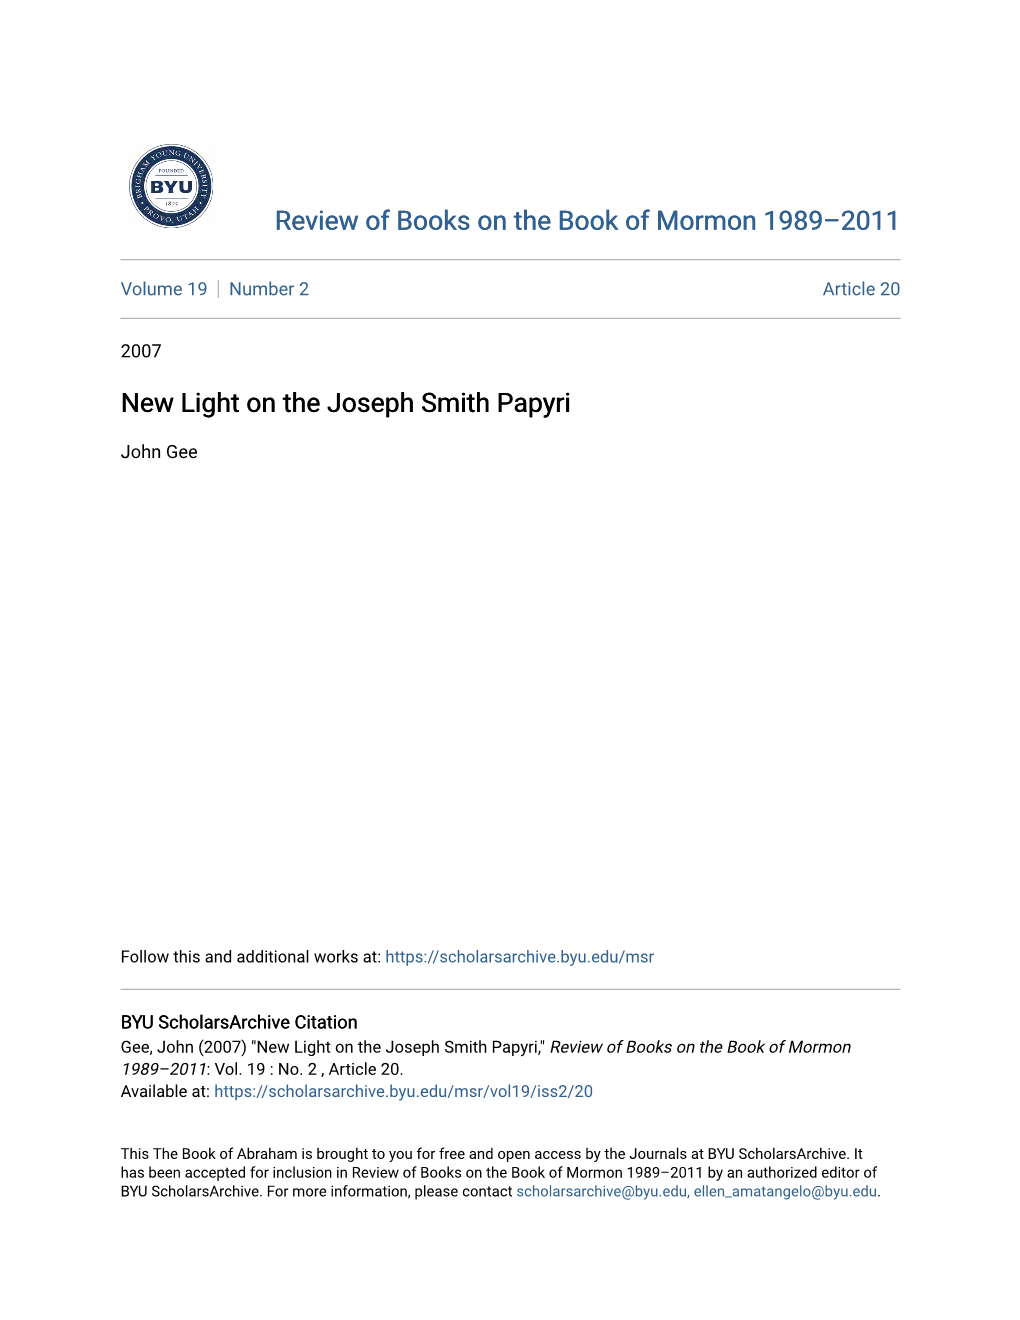 New Light on the Joseph Smith Papyri